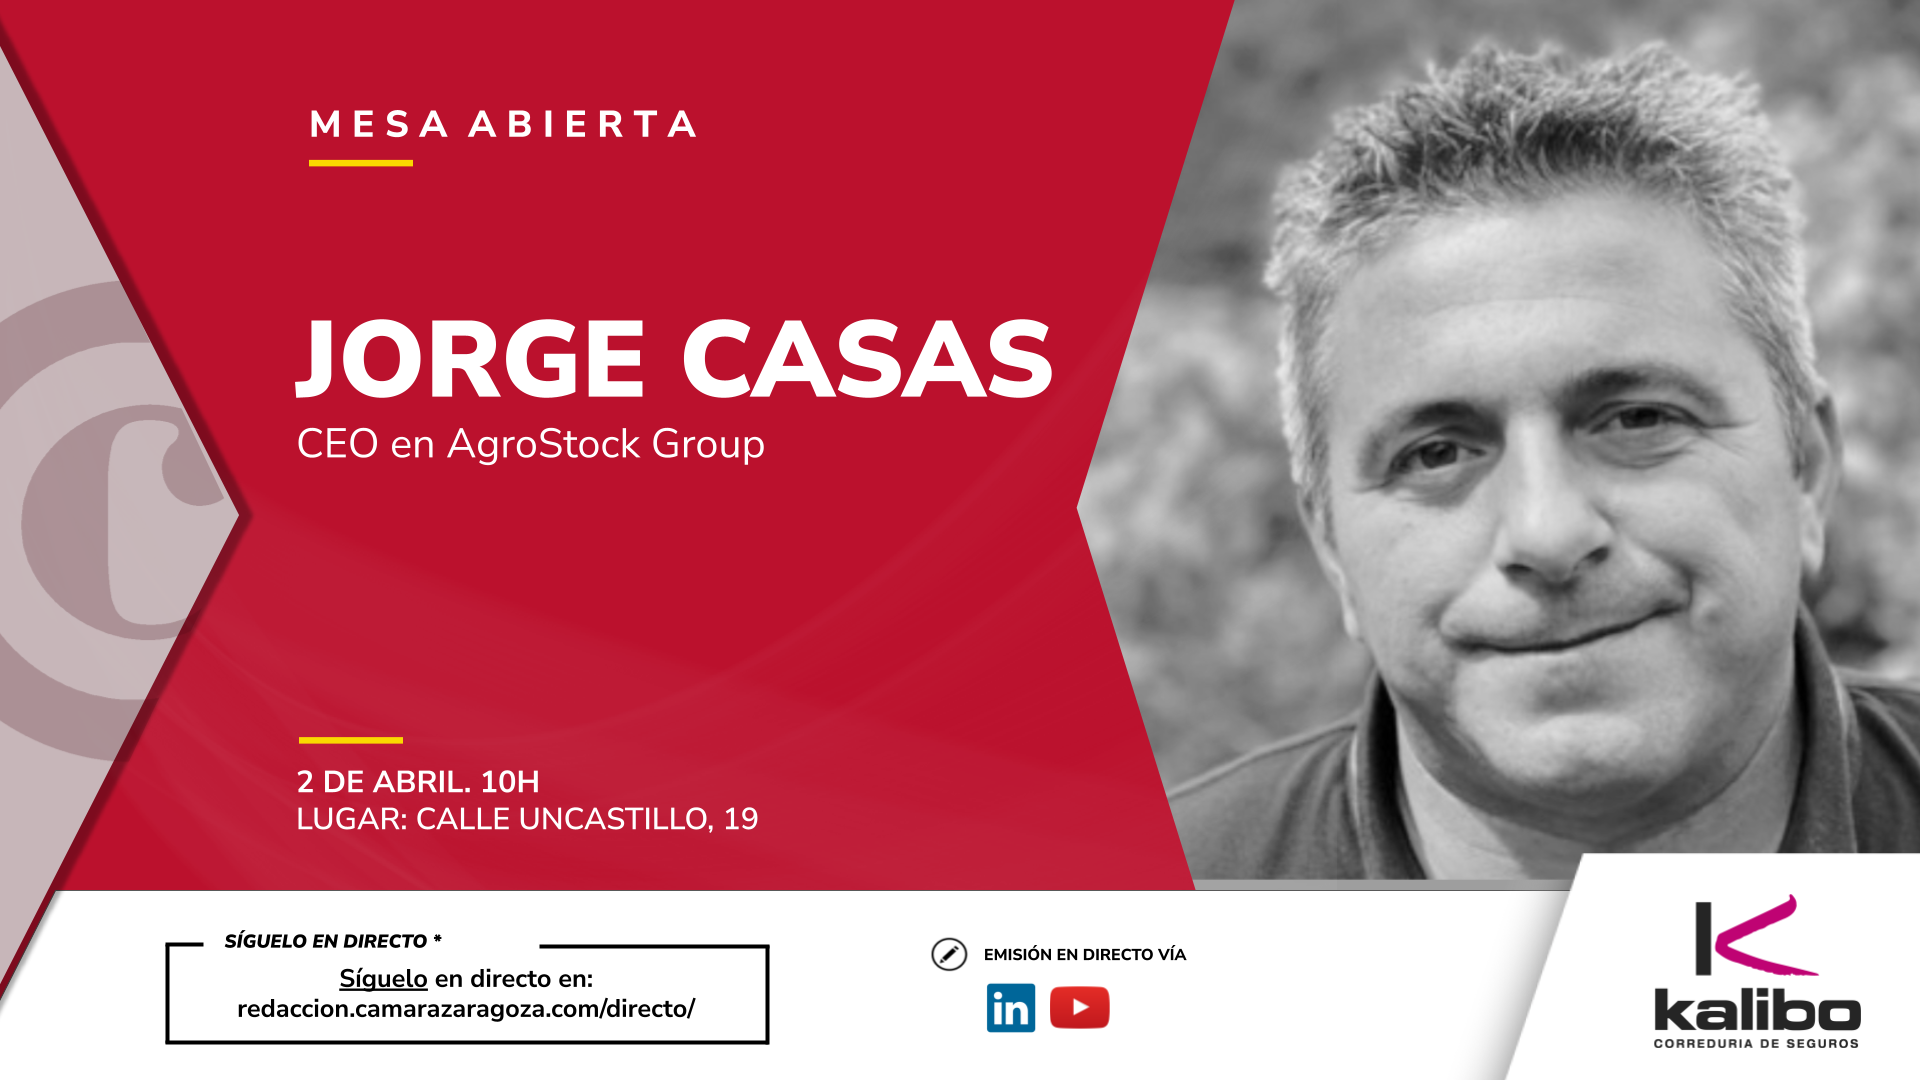 Jorge Casas